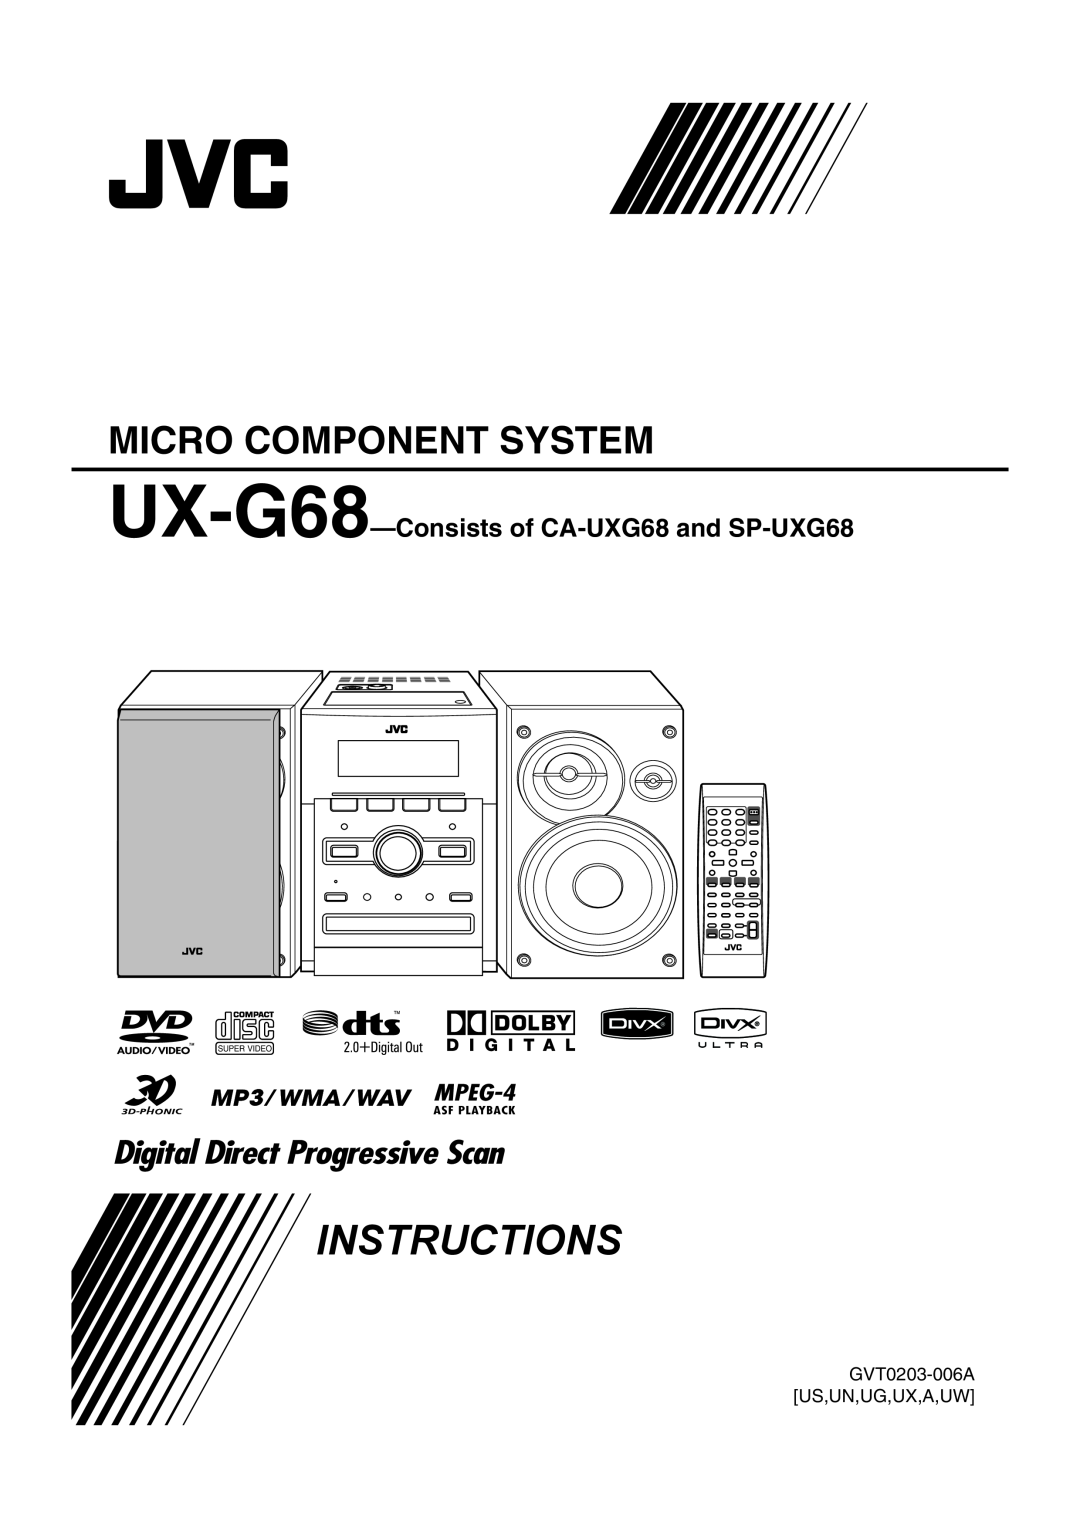 JVC manual UX-G68-Consistsof CA-UXG68and SP-UXG68, GVT0203-006AUS,UN,UG,UX,A,UW, Instructions, Micro Component System 